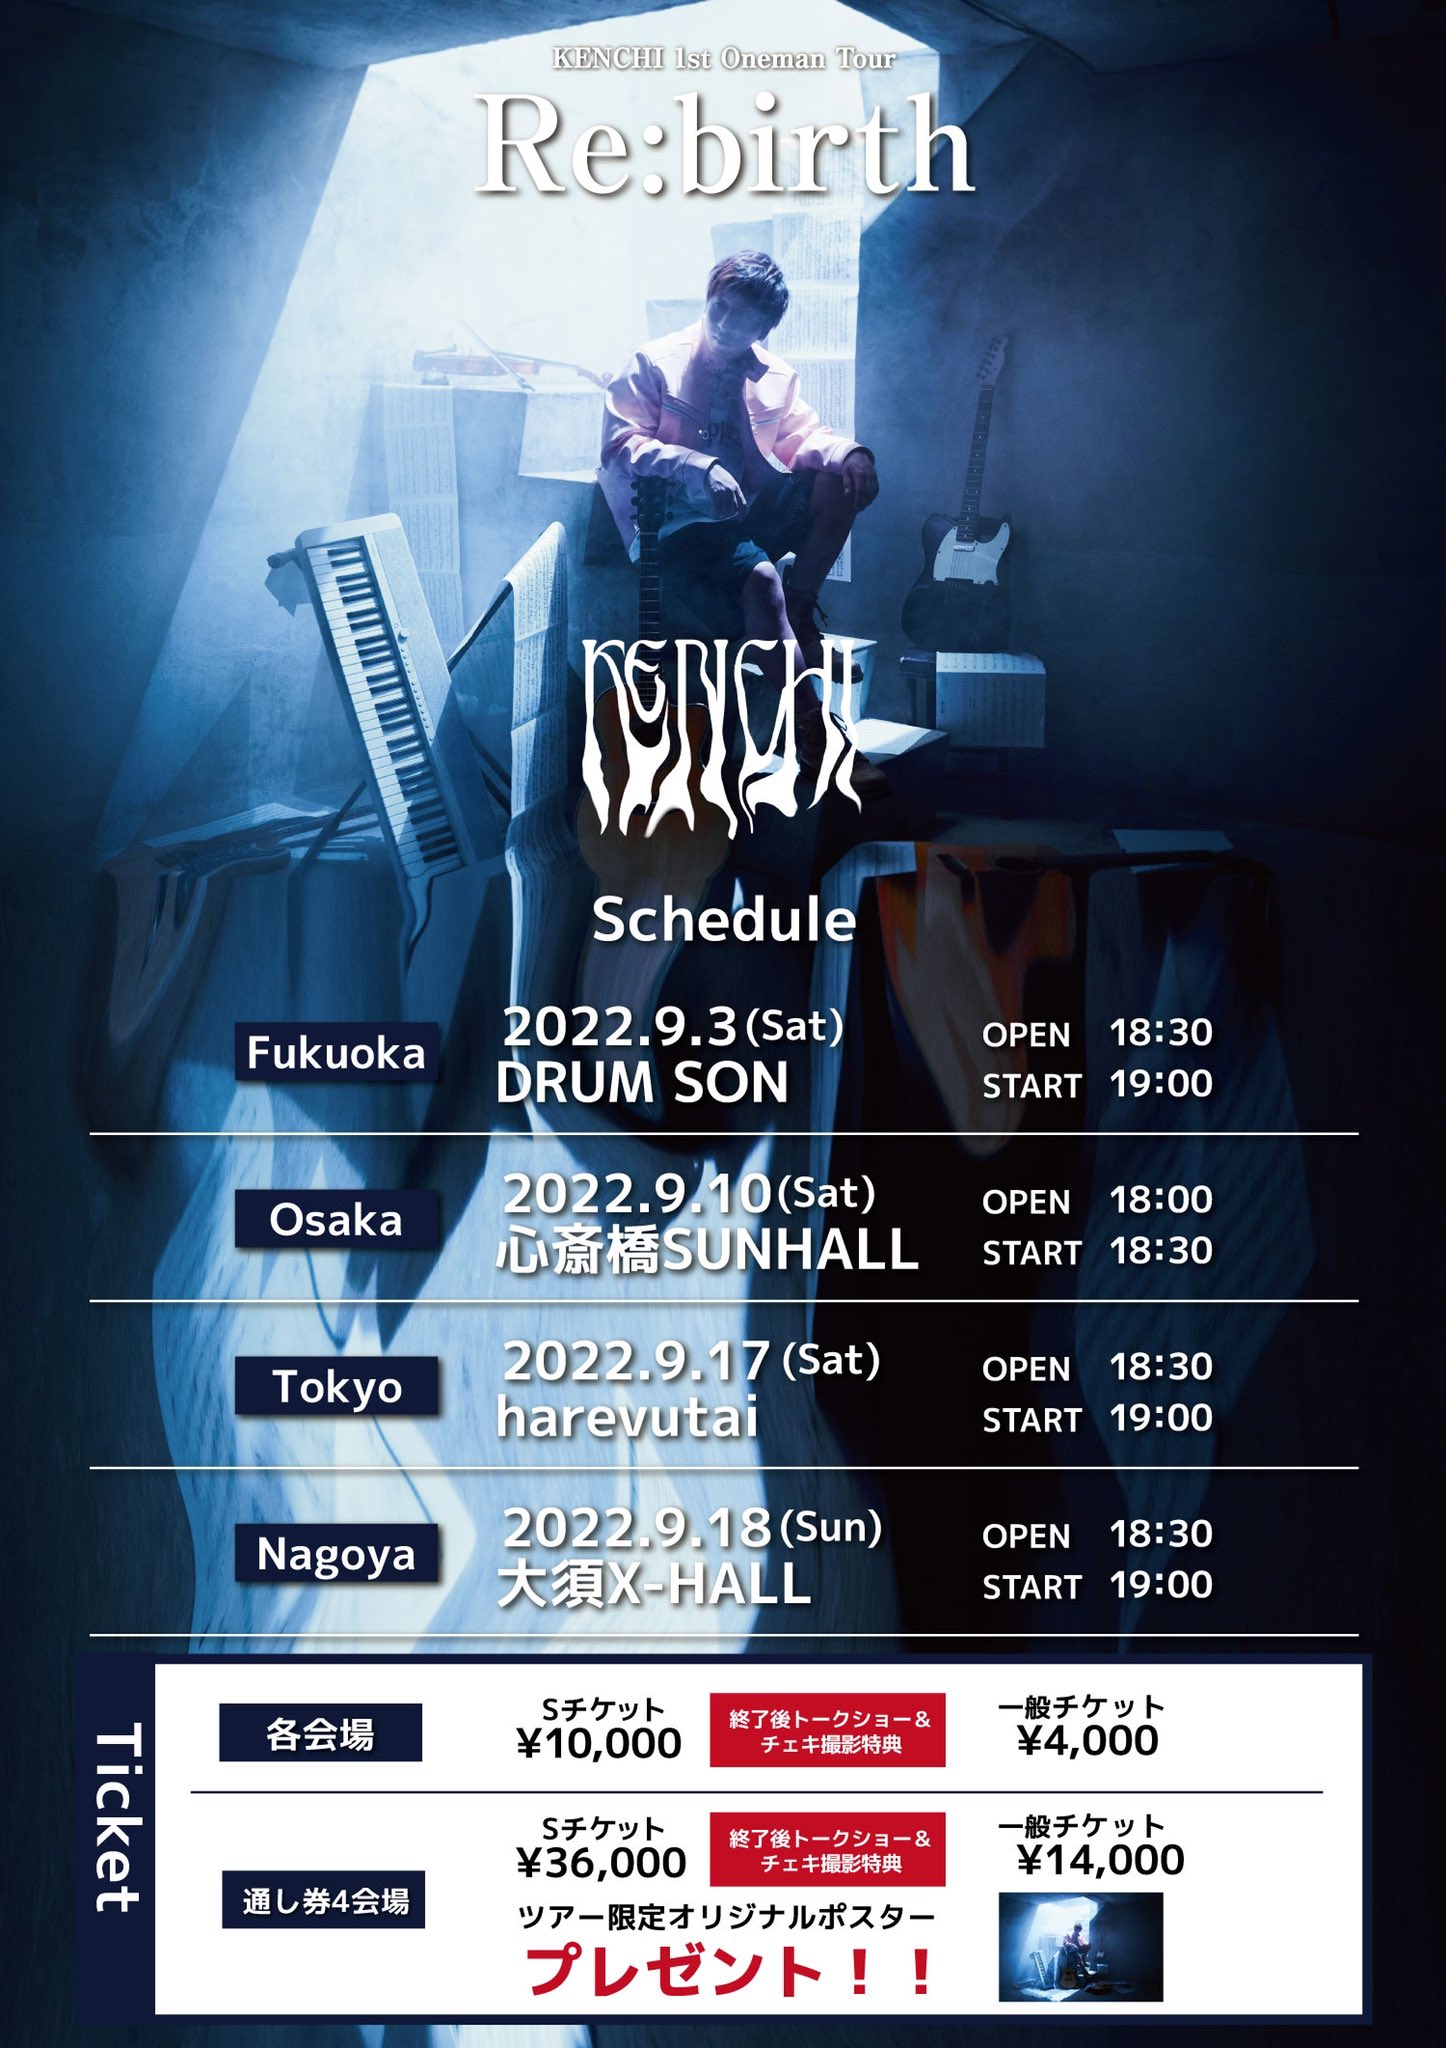 KENCHI 1st Oneman Tour “Re:birth”